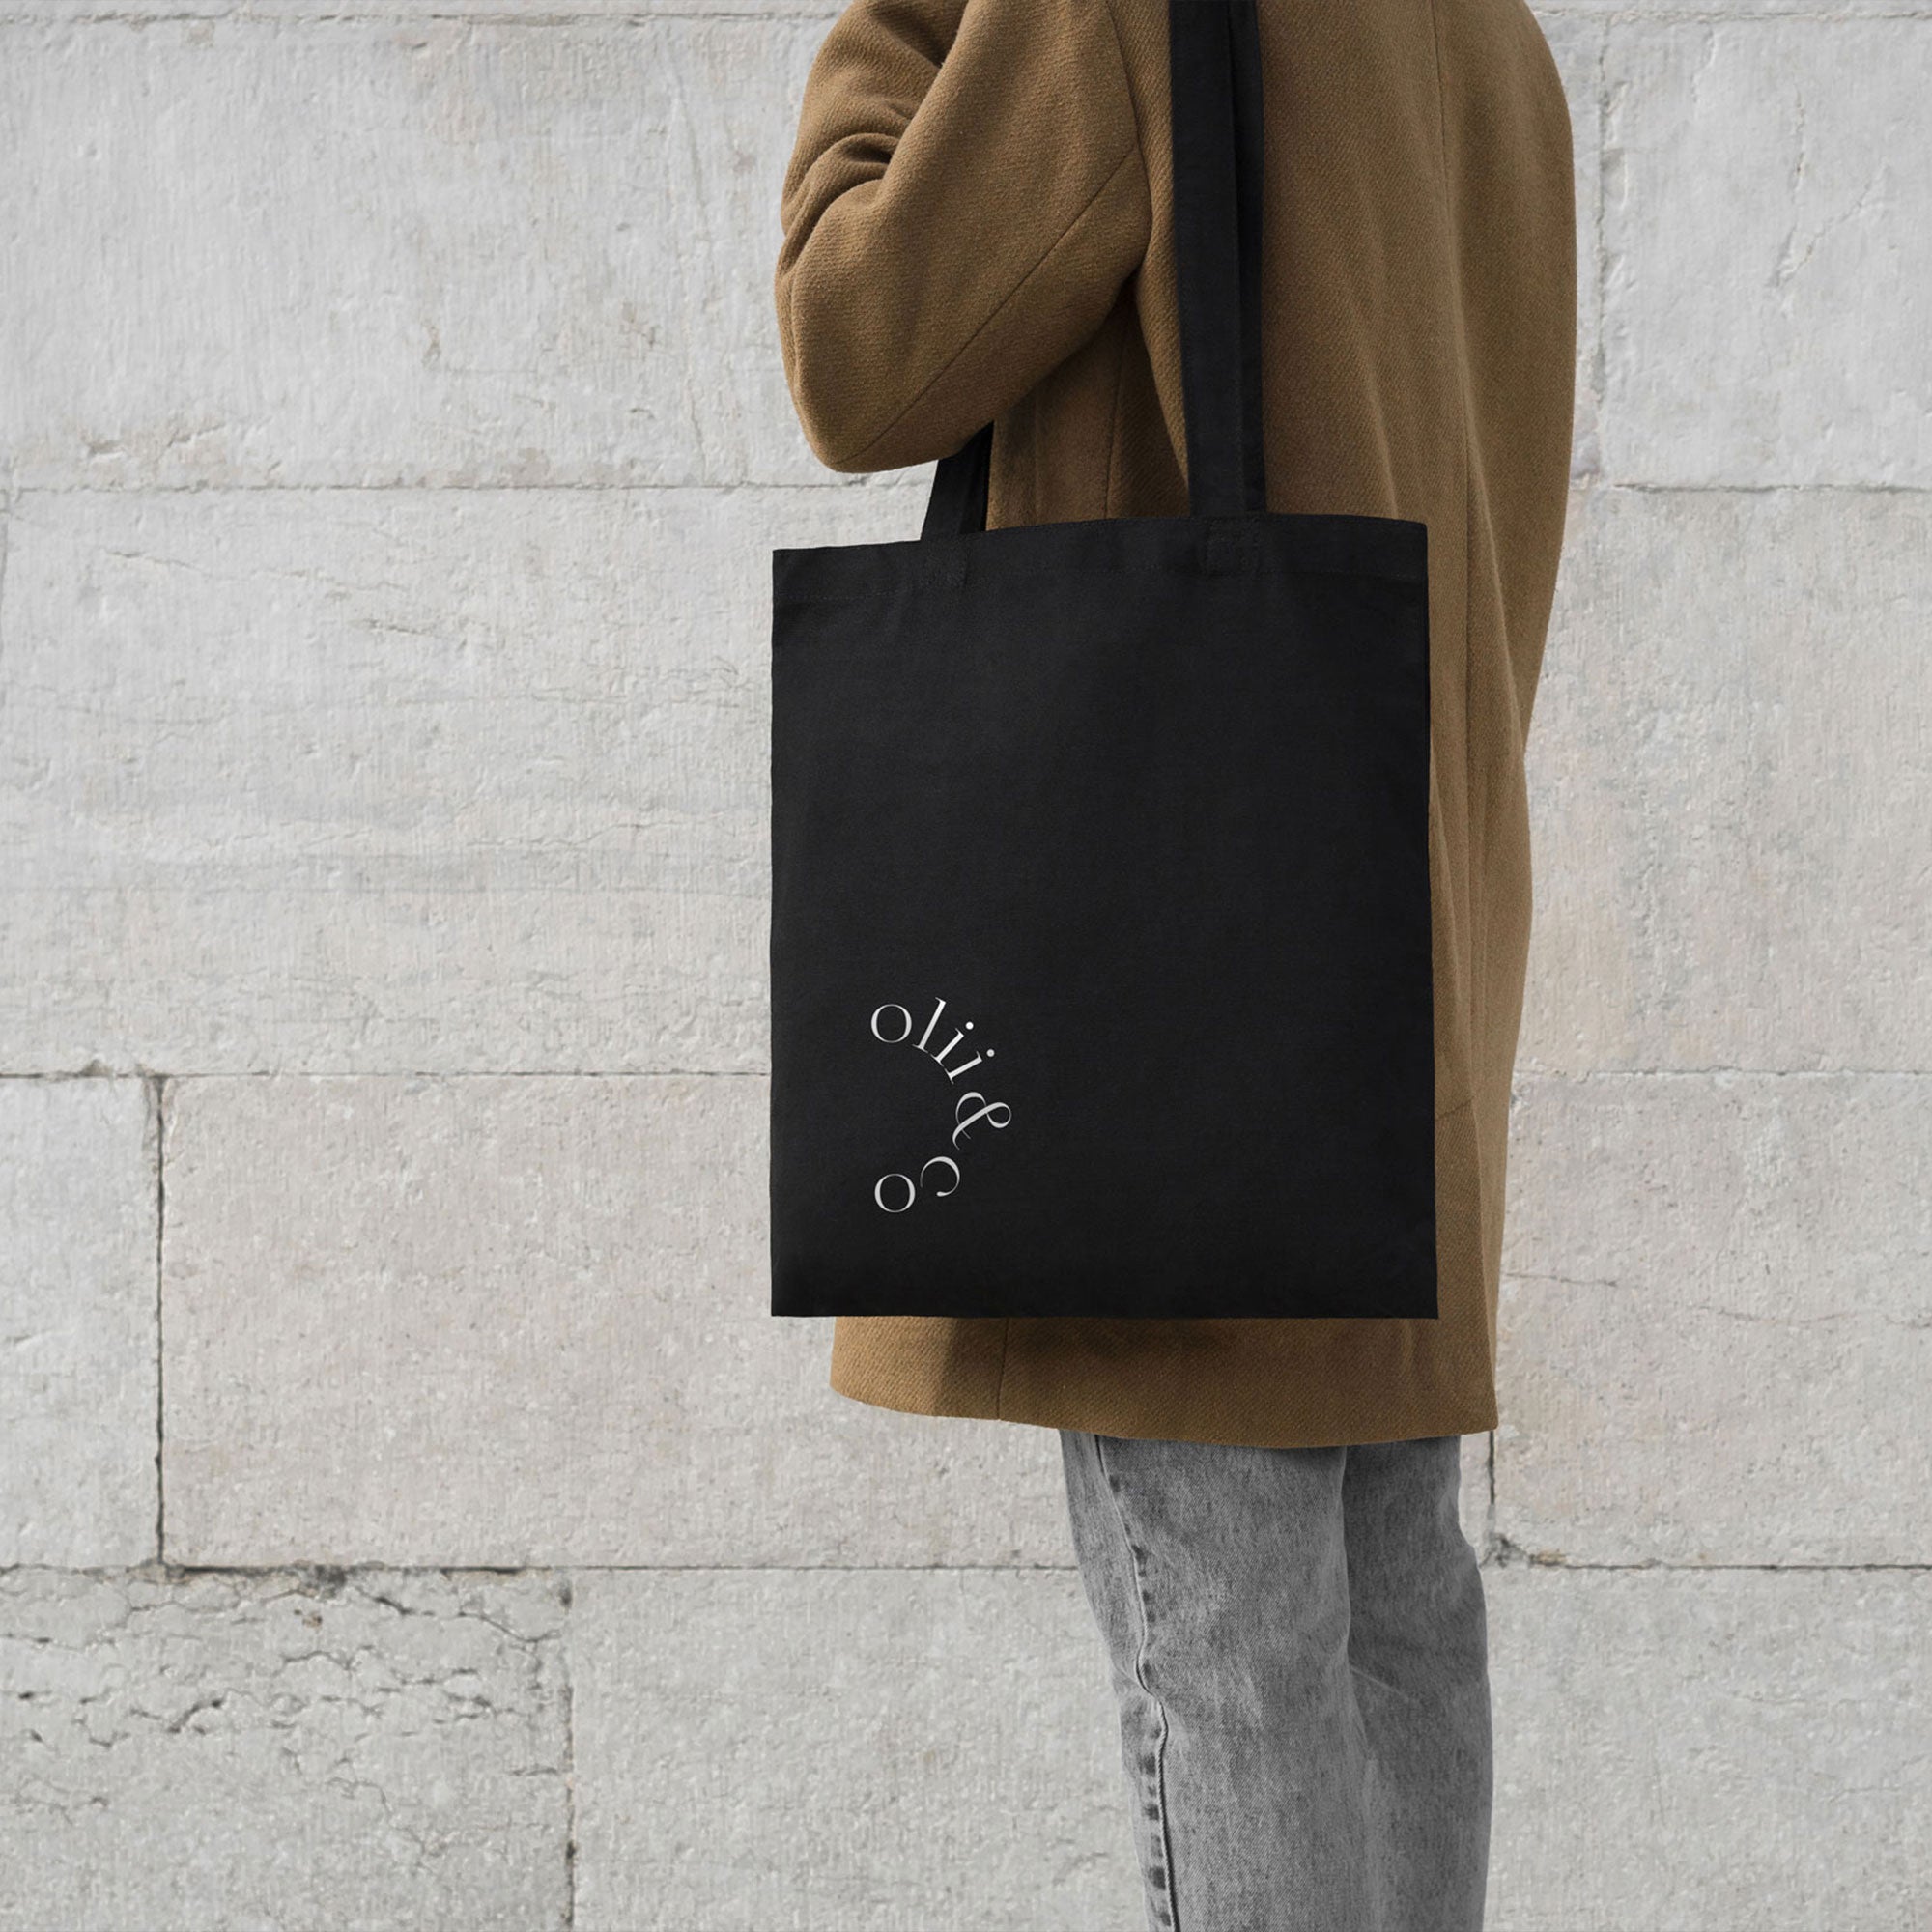 Karolina Król Studio minimalist brand design for an organic essential oils brand